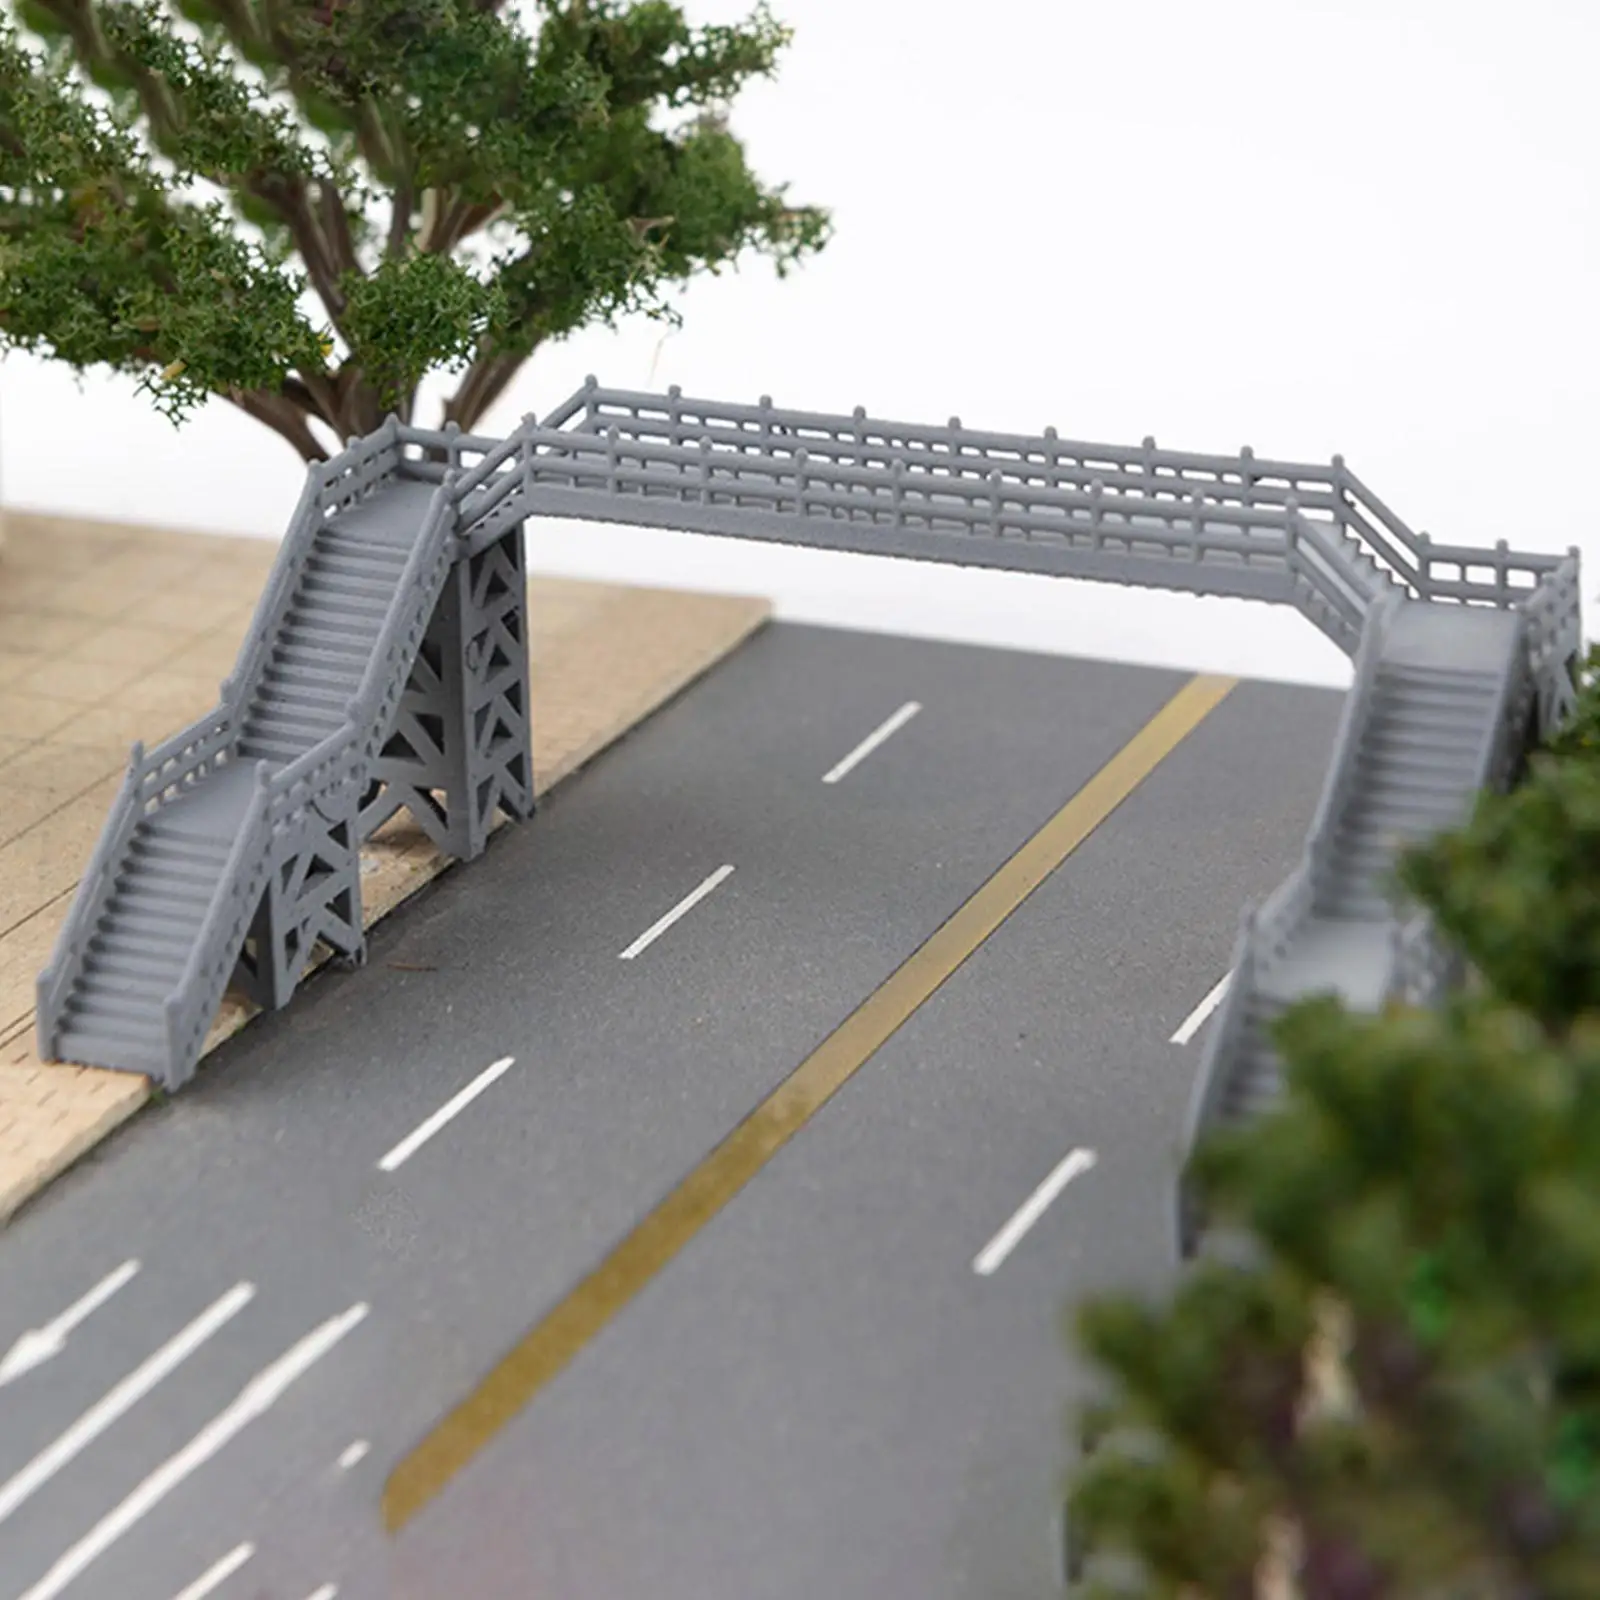 Miniature Train Footbridge Building Set for Model Railway Dioramas